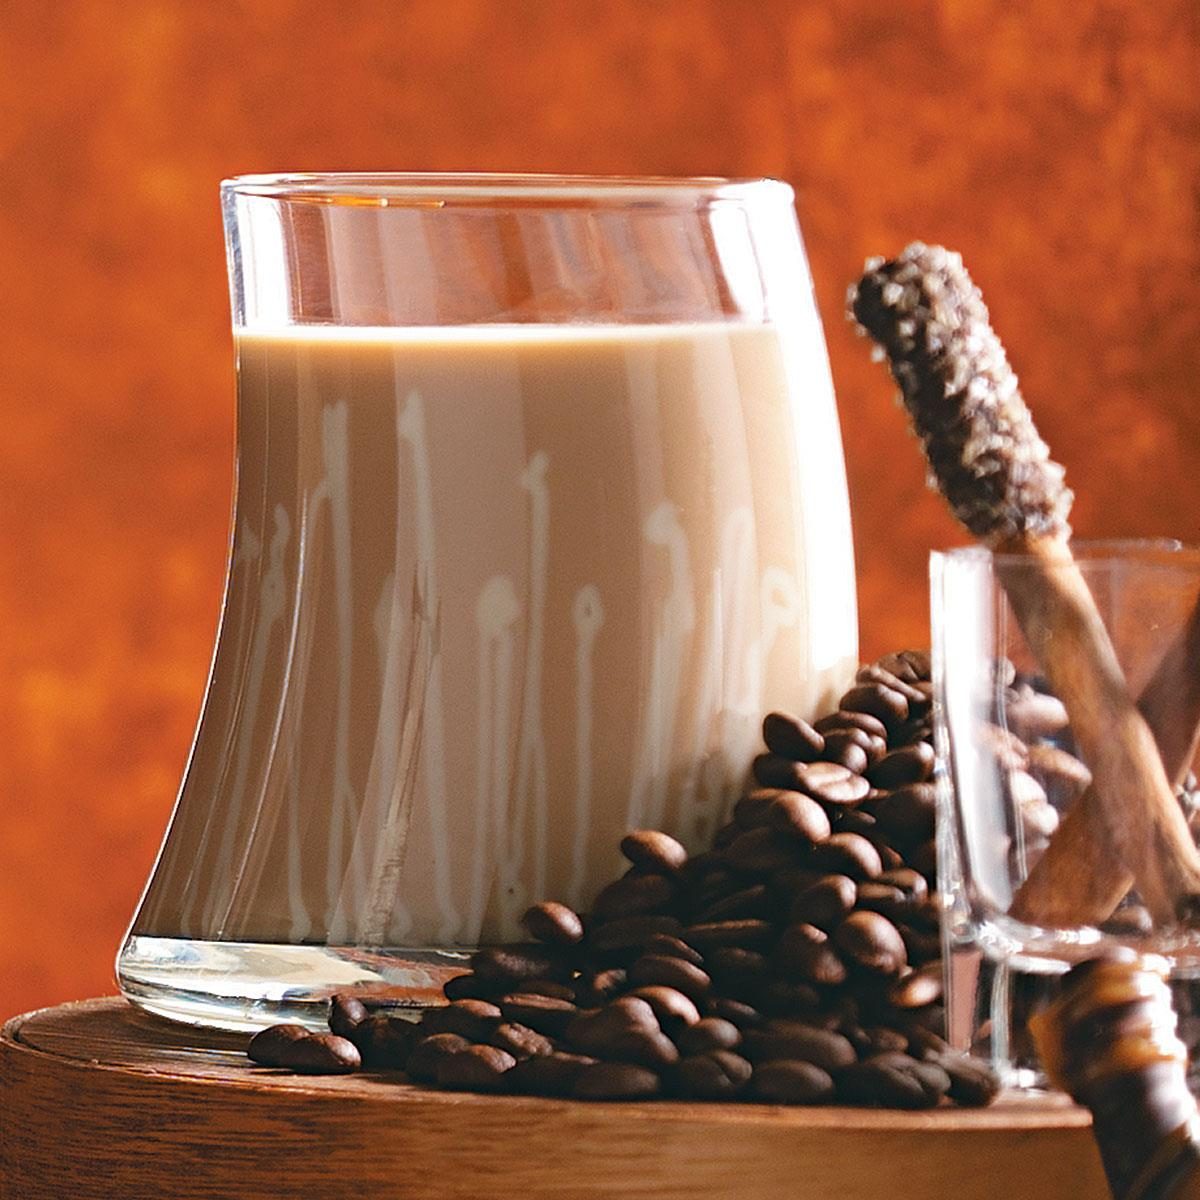 Creamy Vanilla Coffee Recipe: How to Make It